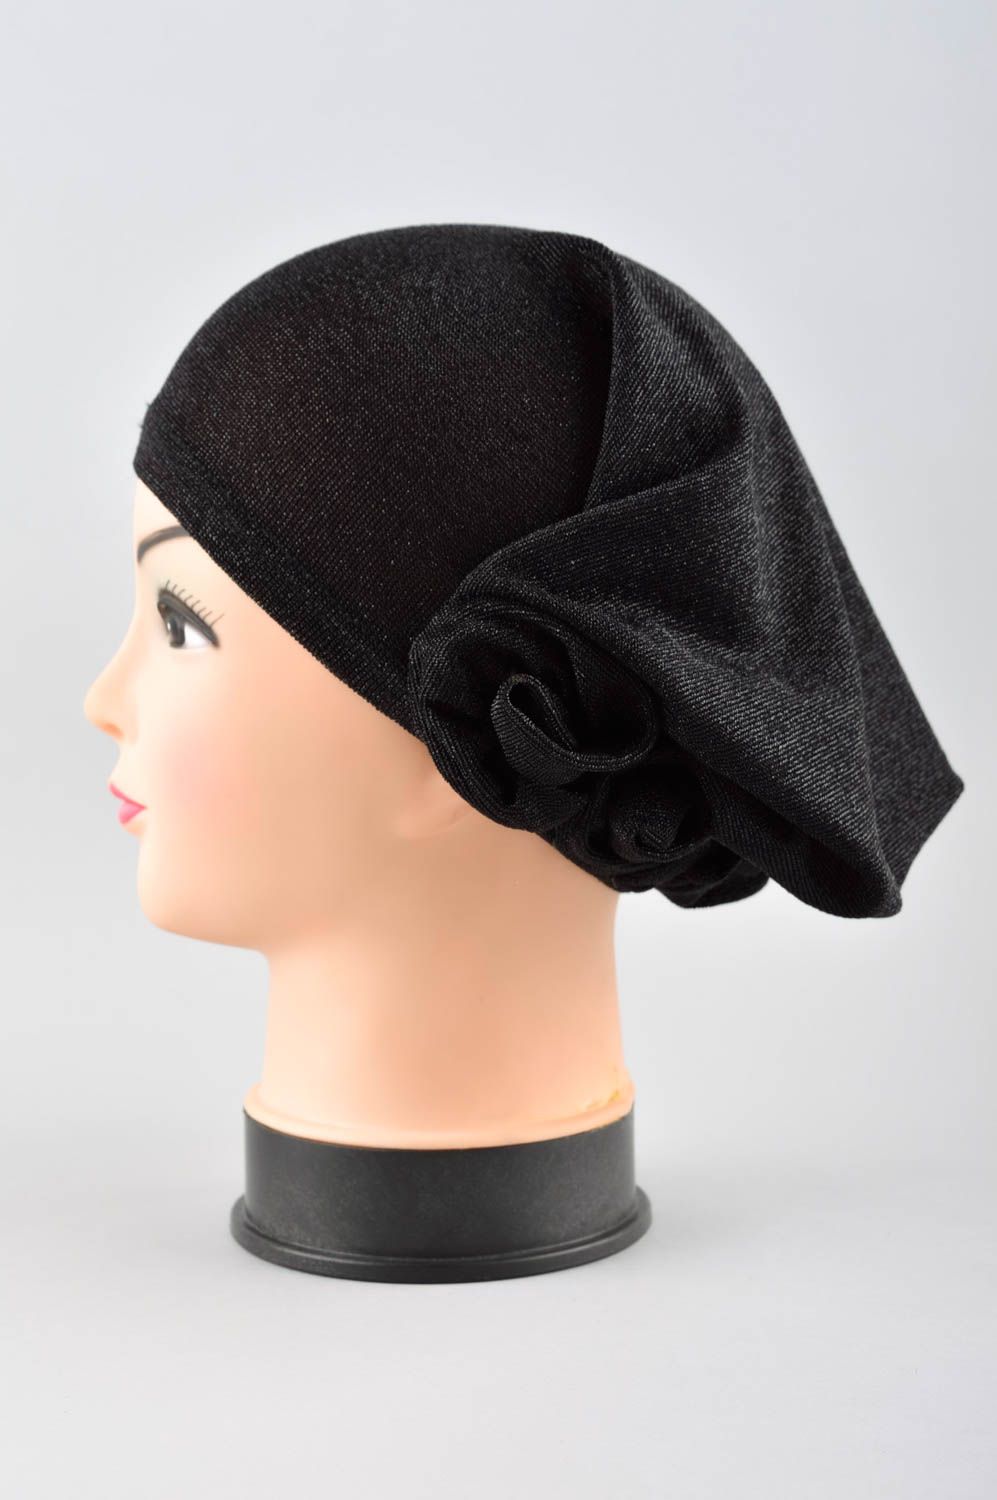 Handmade women hat winter hat winter accessories for girls stylish warm hat photo 2